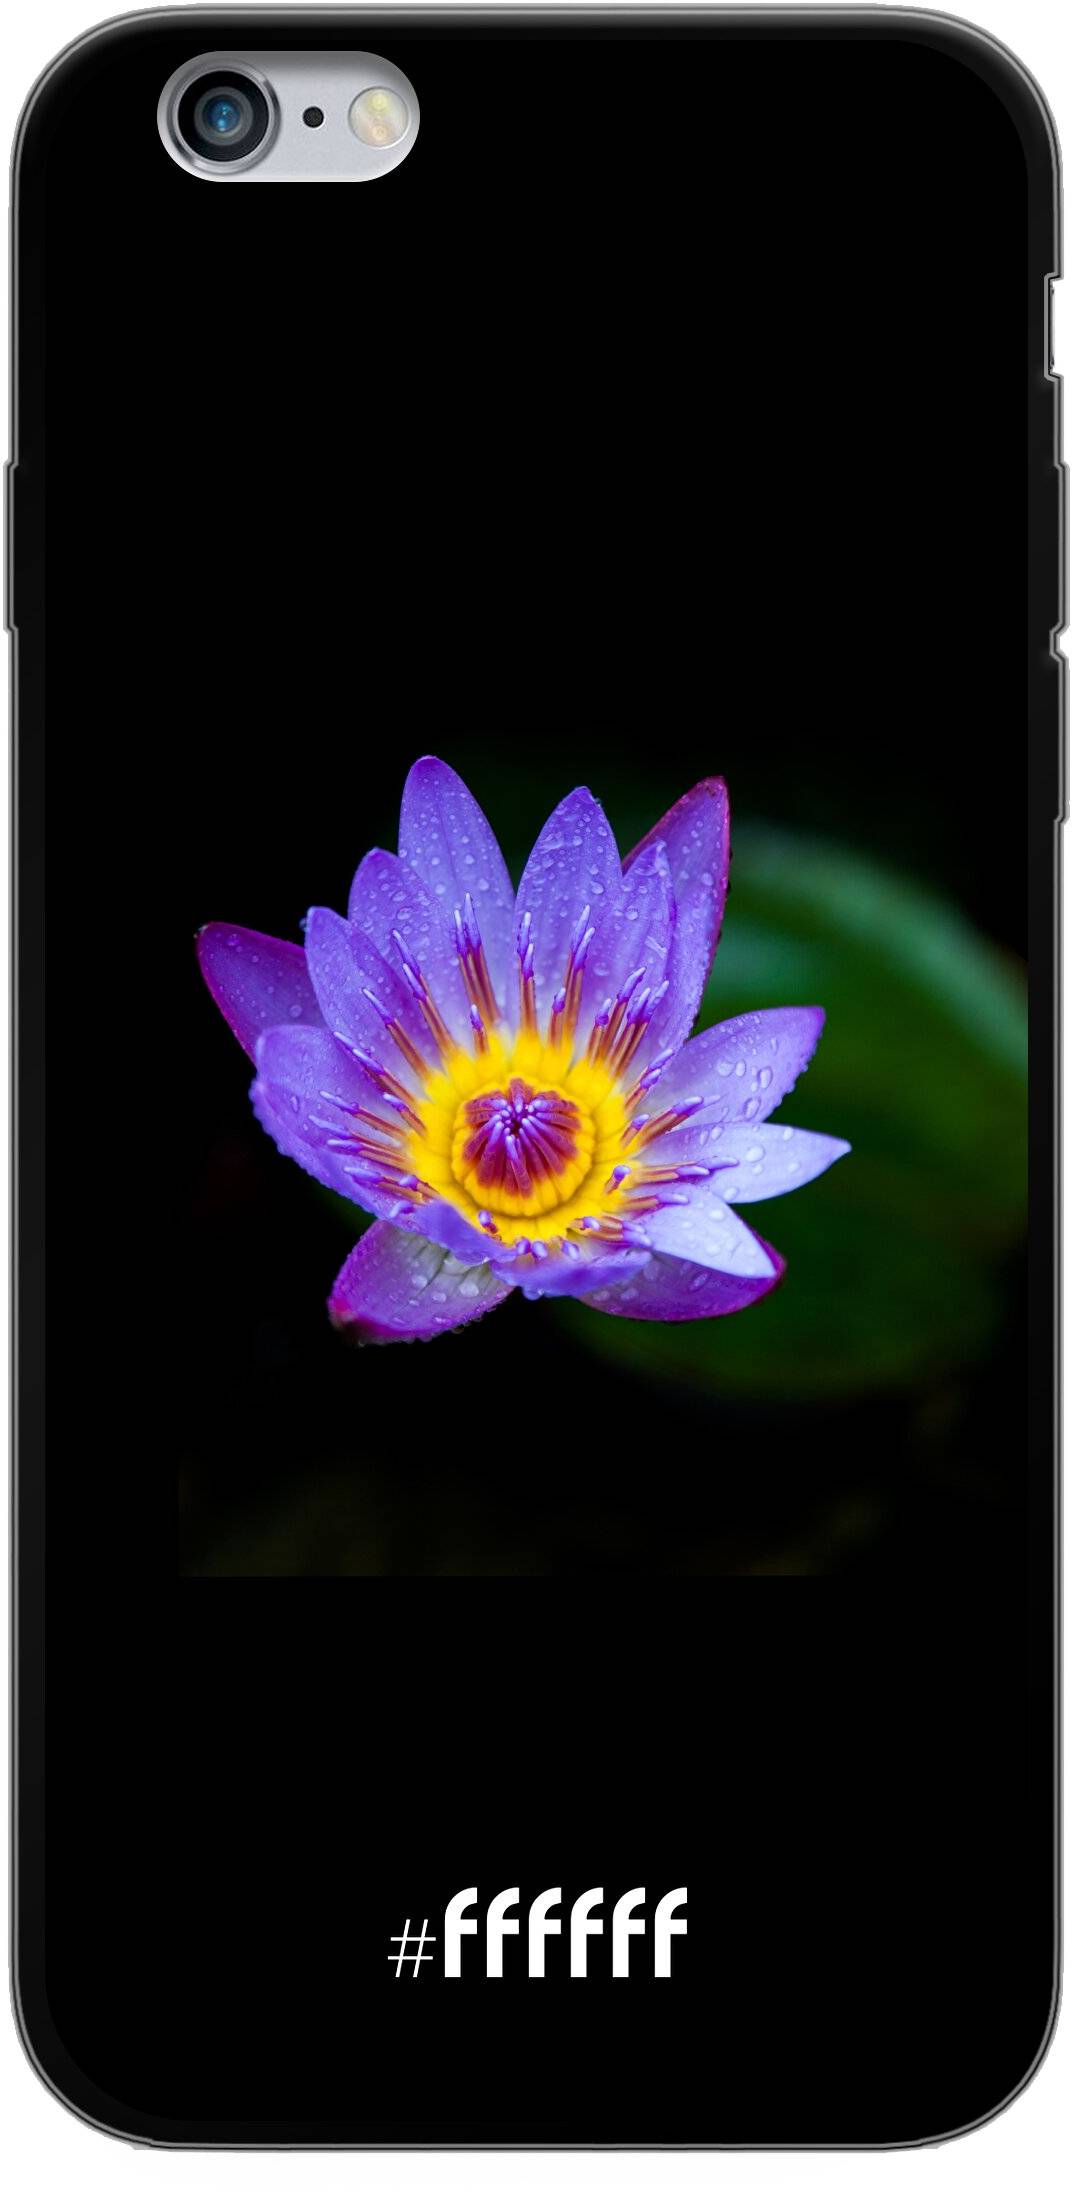 Purple Flower in the Dark iPhone 6